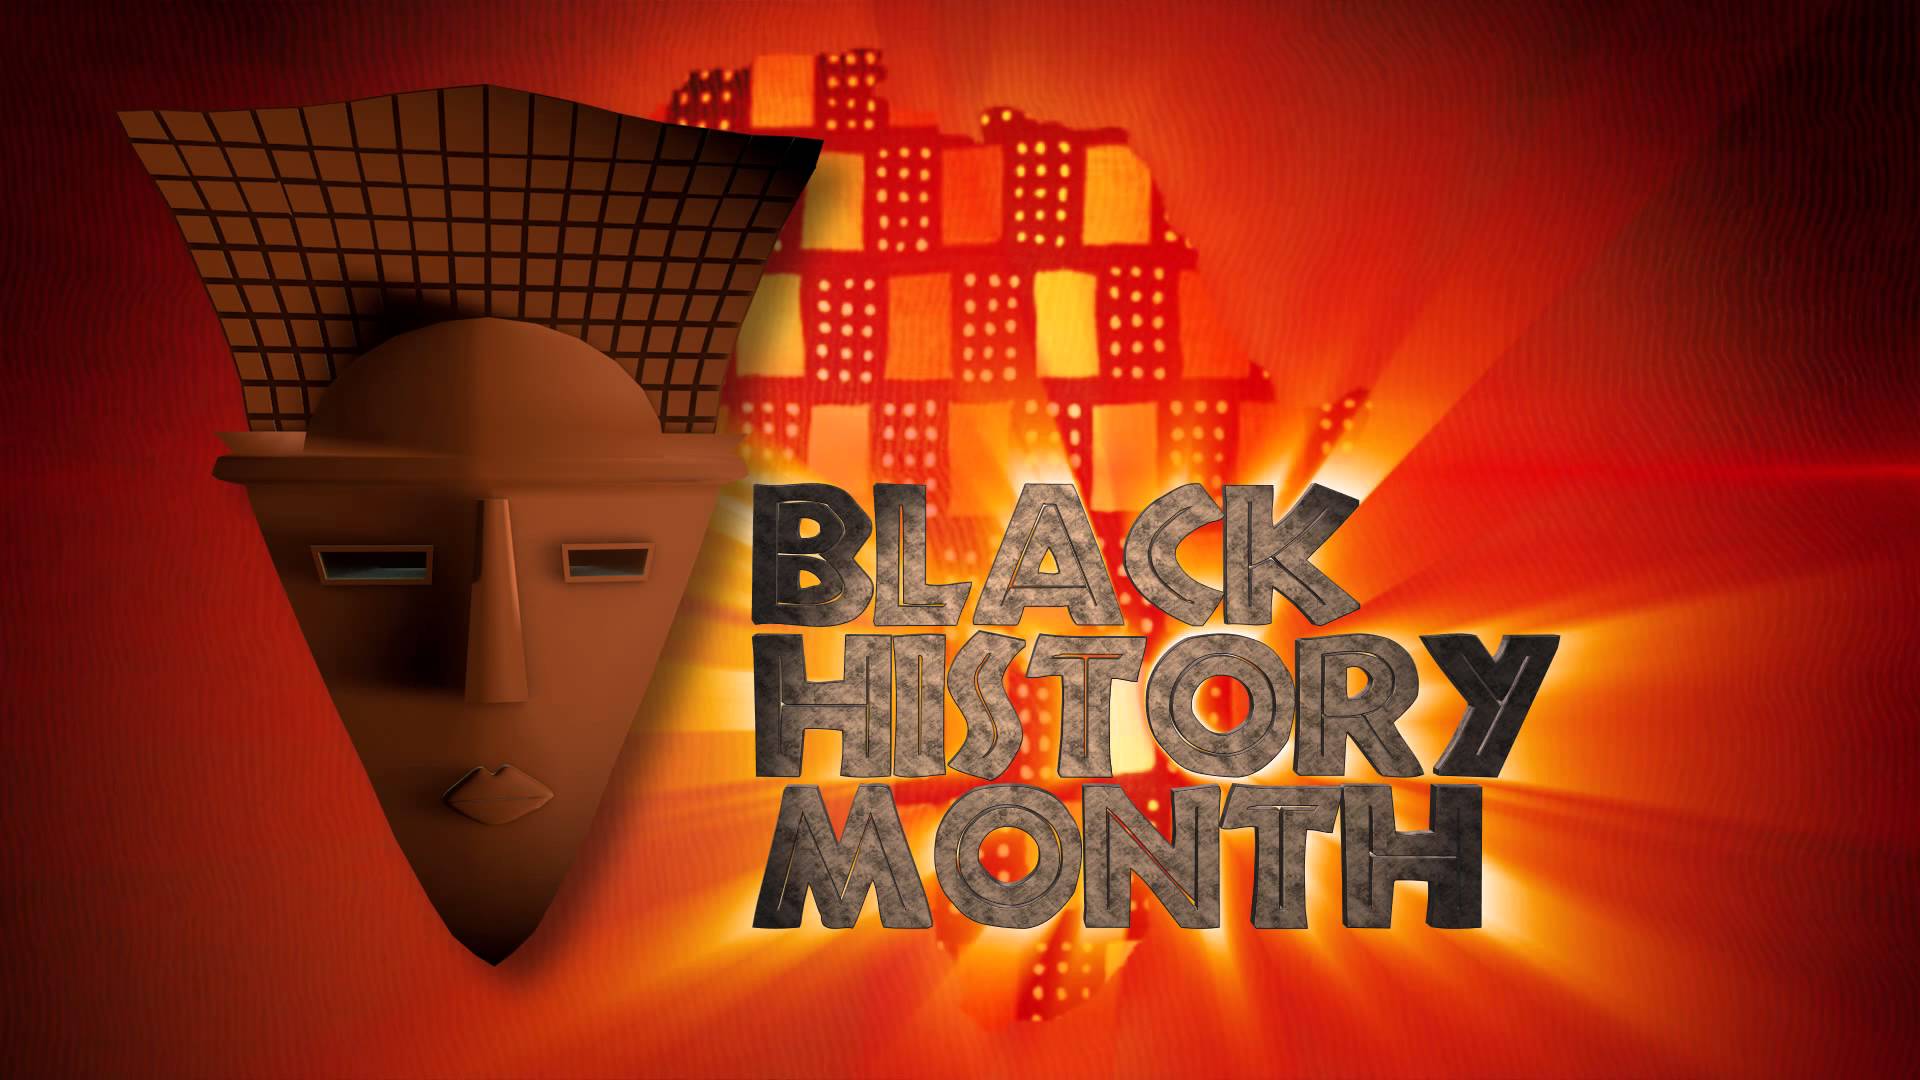 [49+] Black History Month Desktop Wallpaper on WallpaperSafari